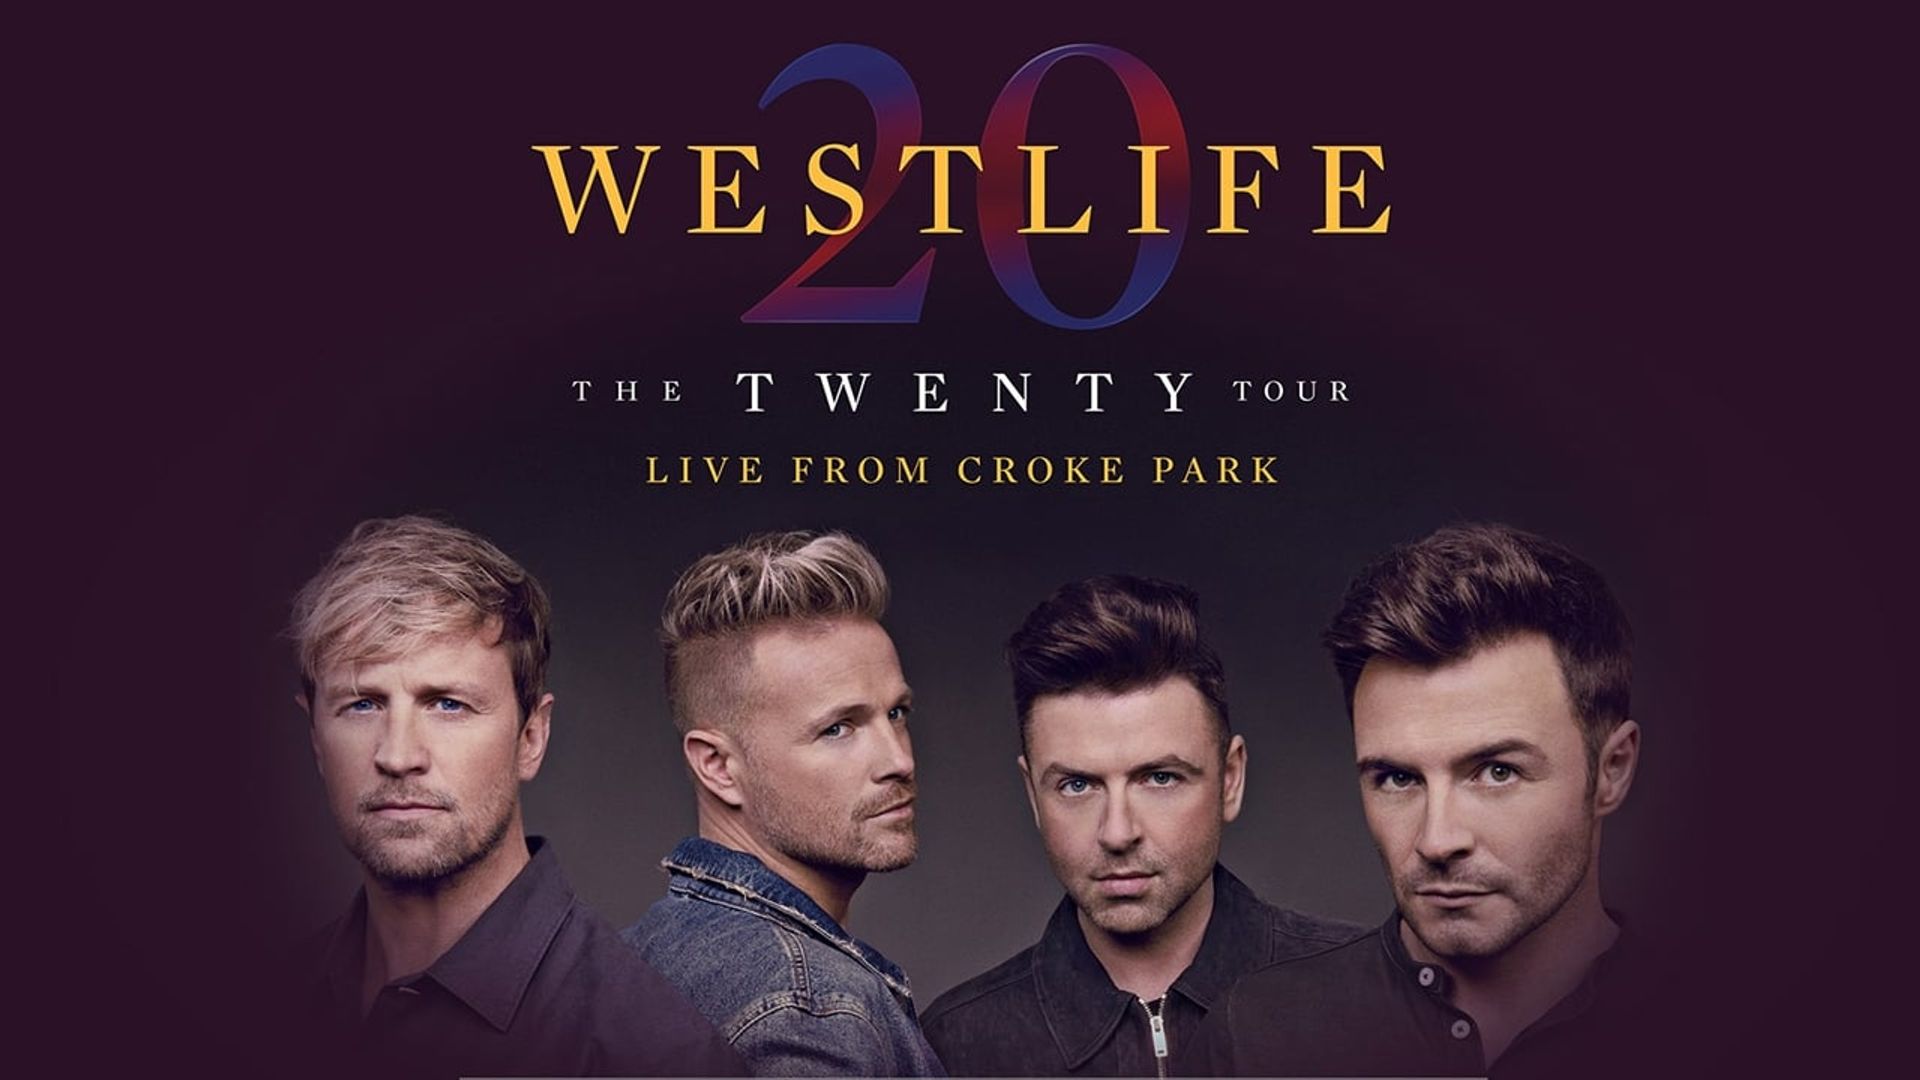 Westlife: Live at Wembley Stadium (2022) - IMDb